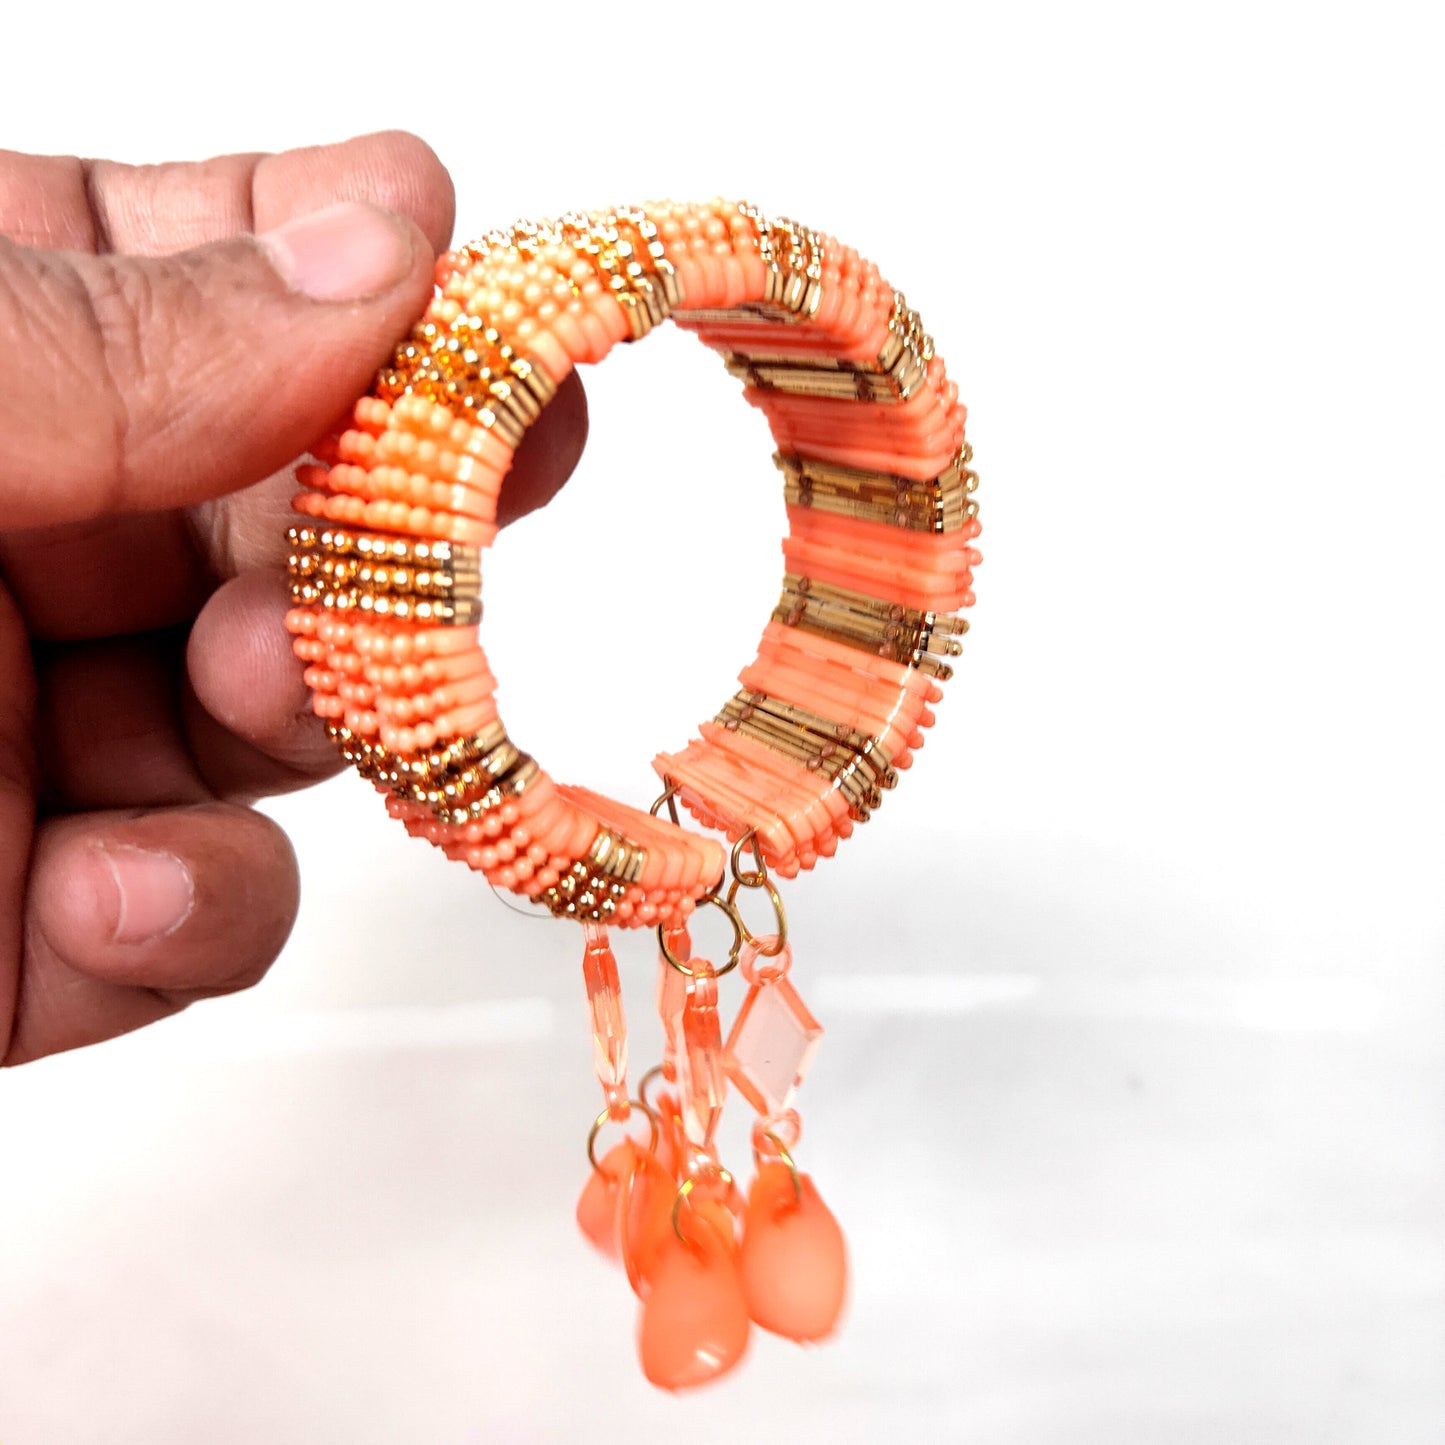 Anokhi Ada Plastic Beads Stylish Latkan Cuff Bangle Bracelet for Kids and Girls (AO-05 Bracelet)